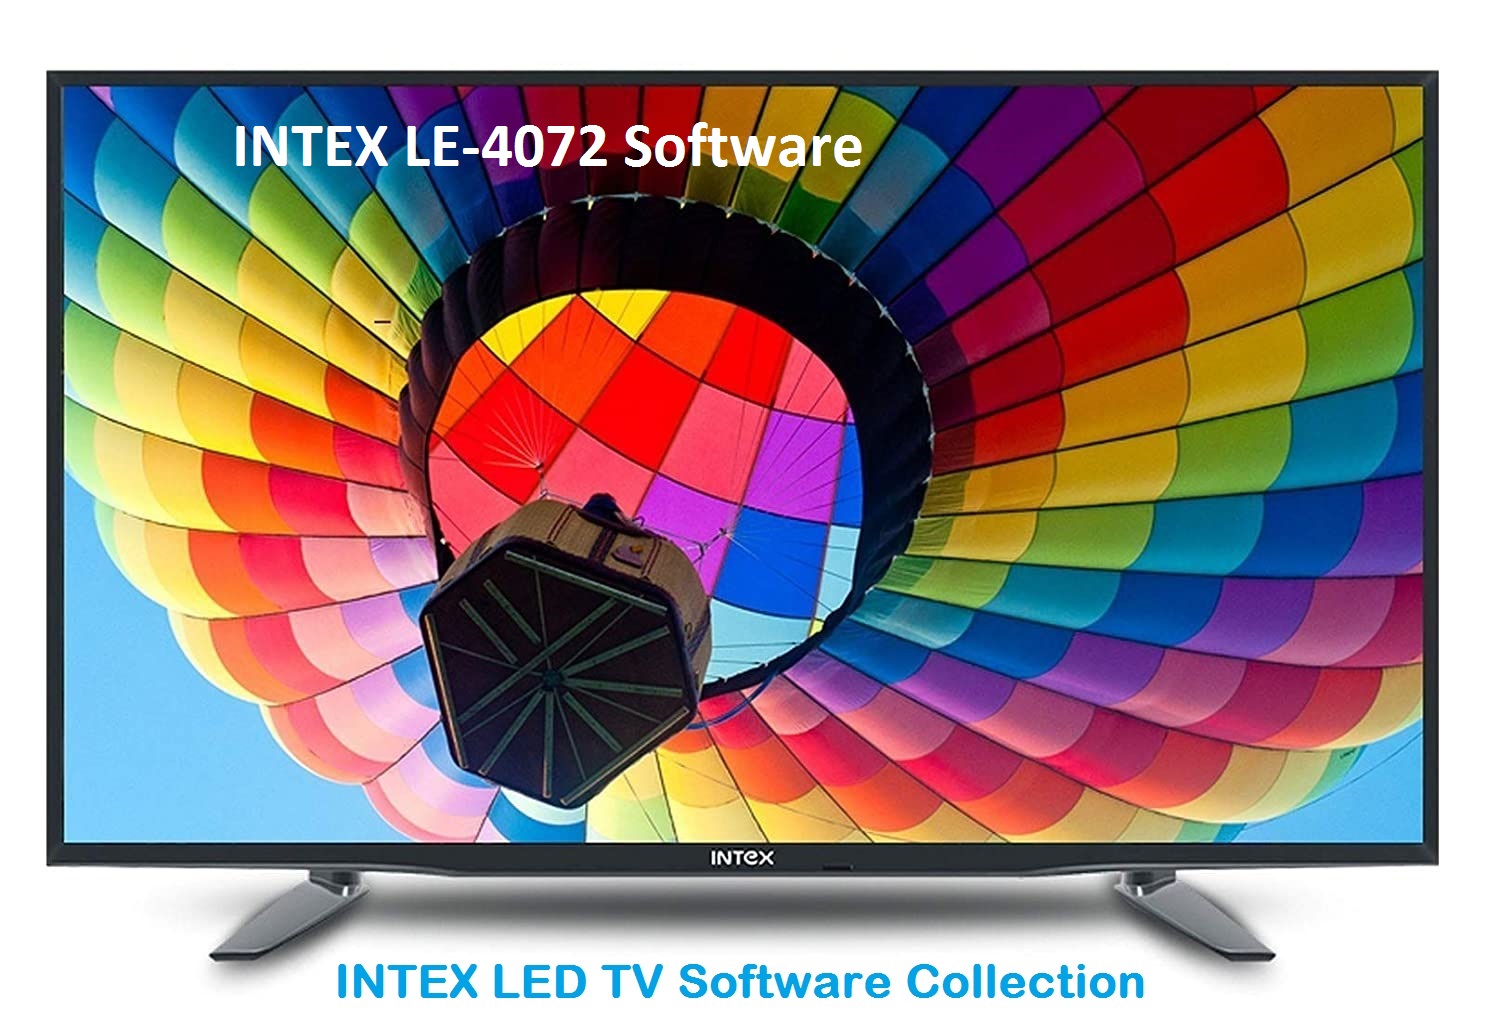 Intex Le-4072